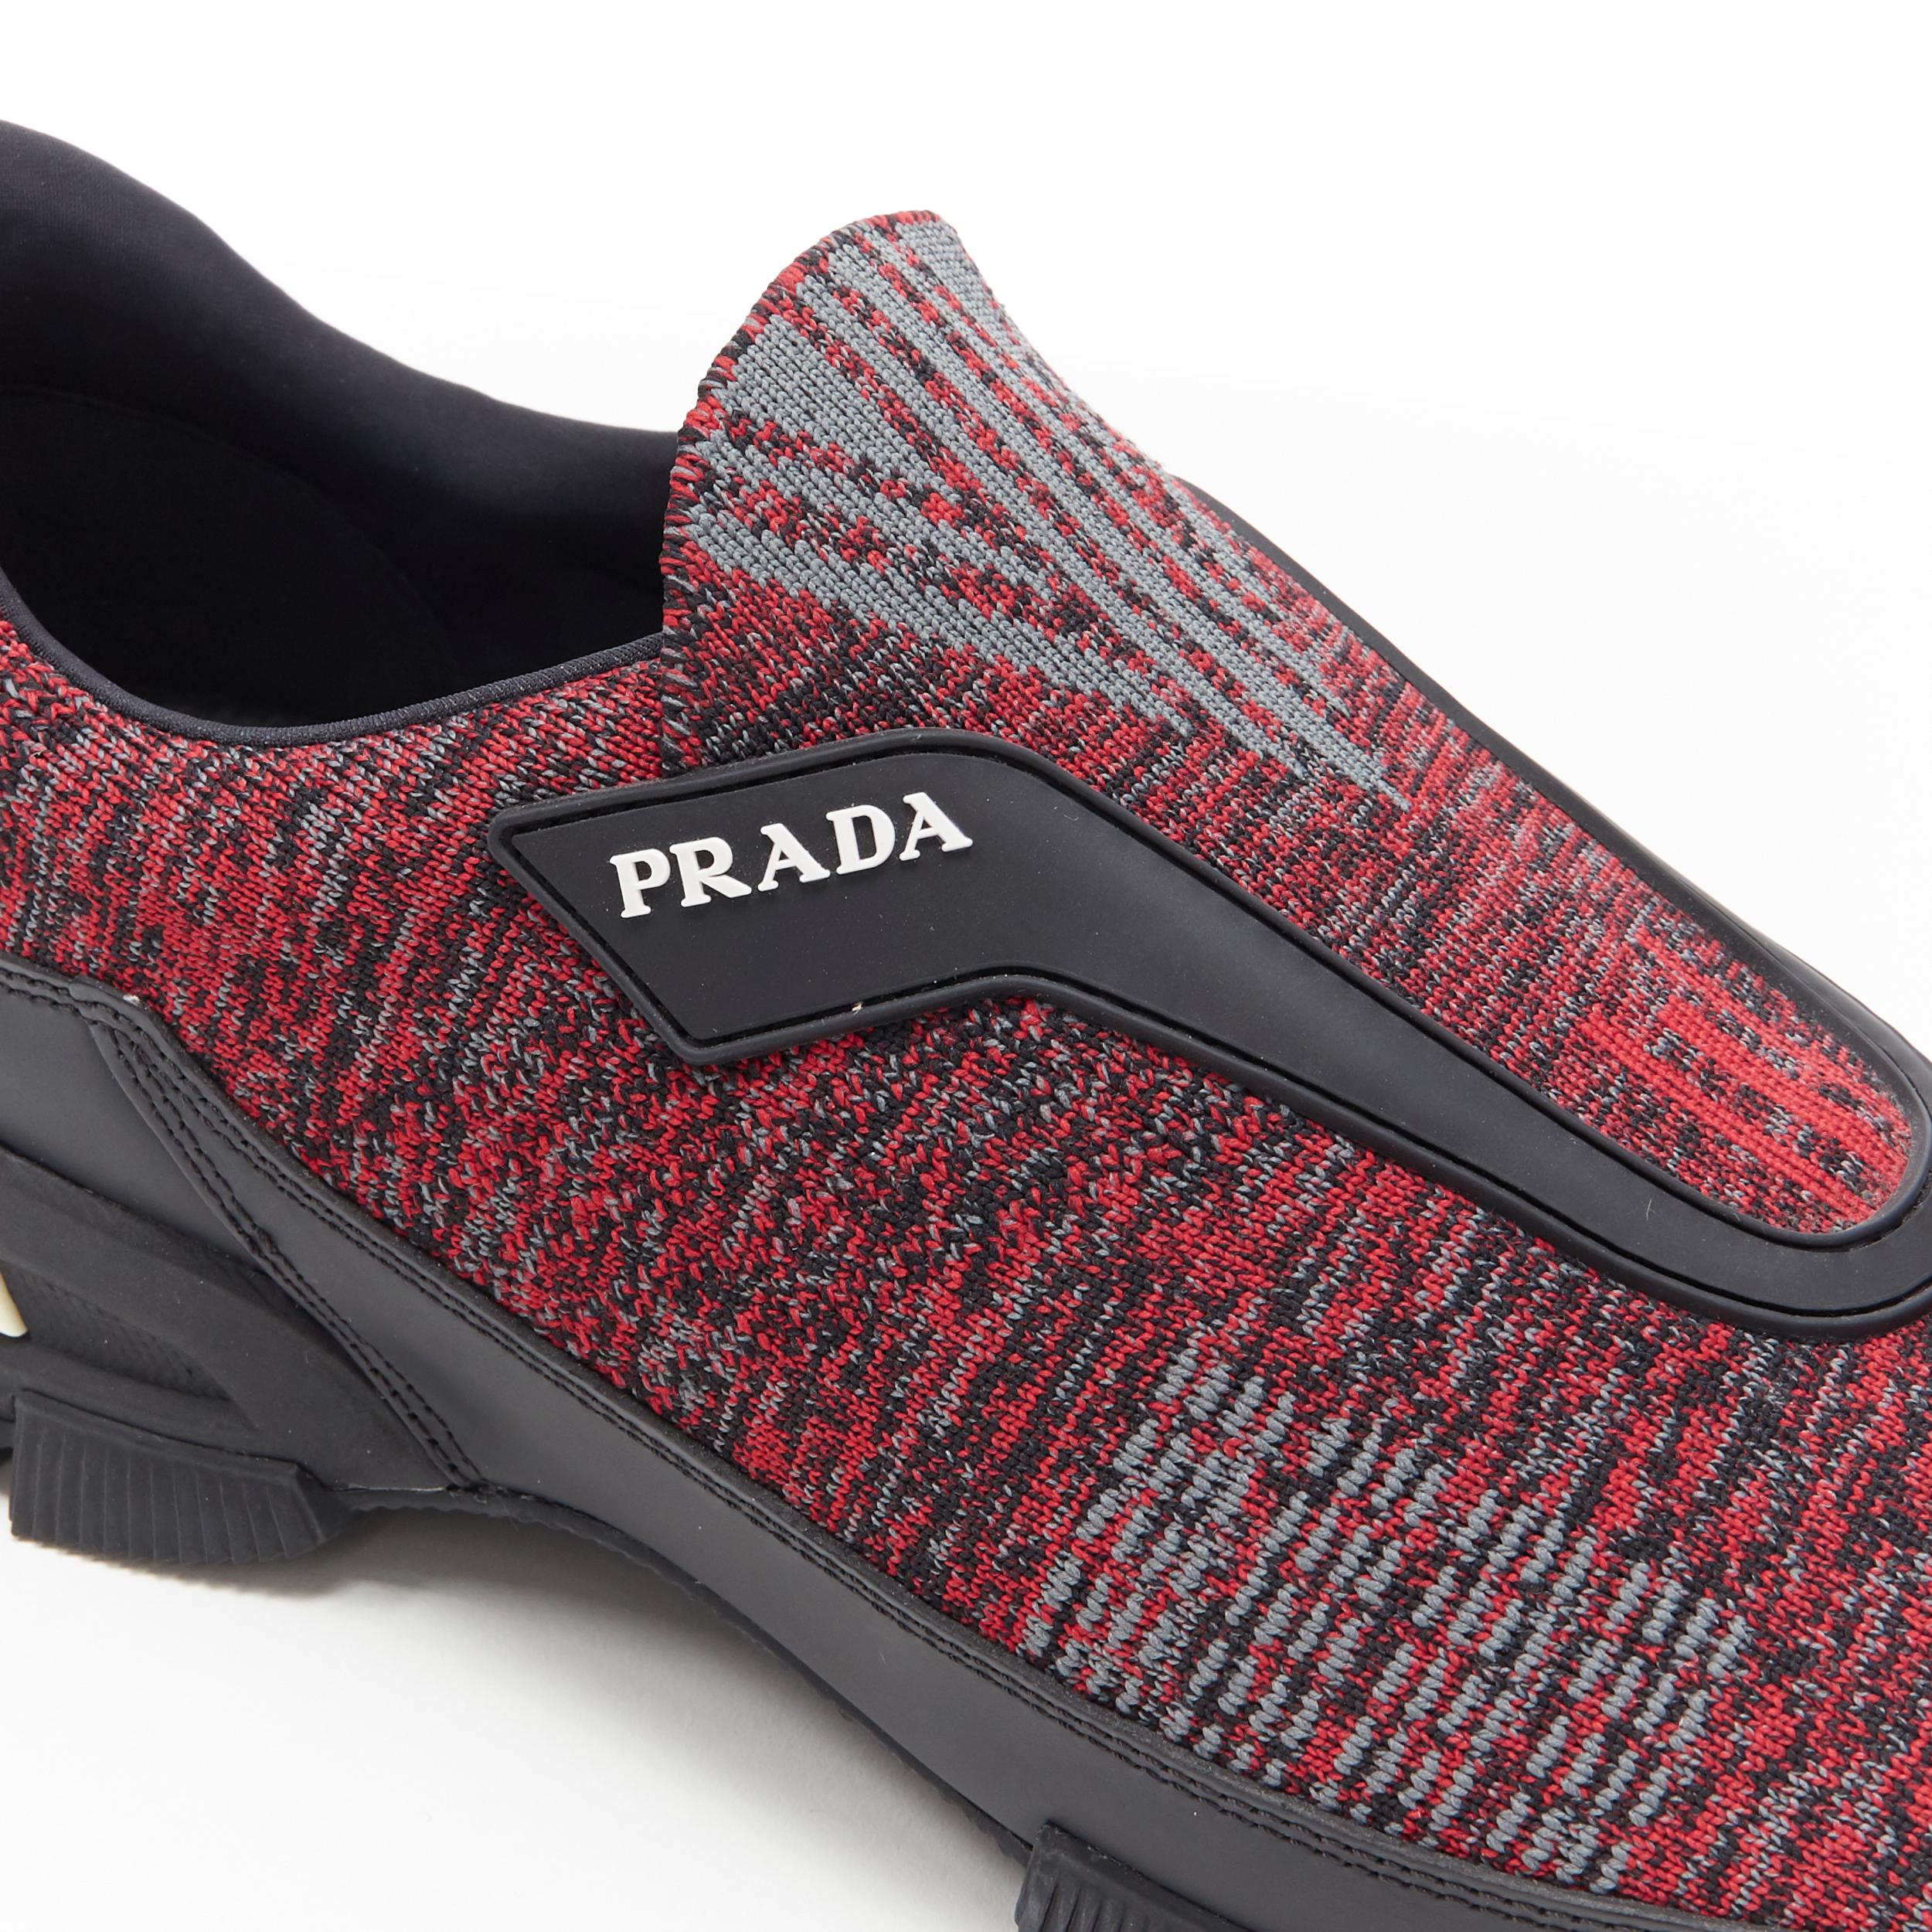 new PRADA Crossection Knit Low red black sock low runner sneakers UK6 US7 EU39 3